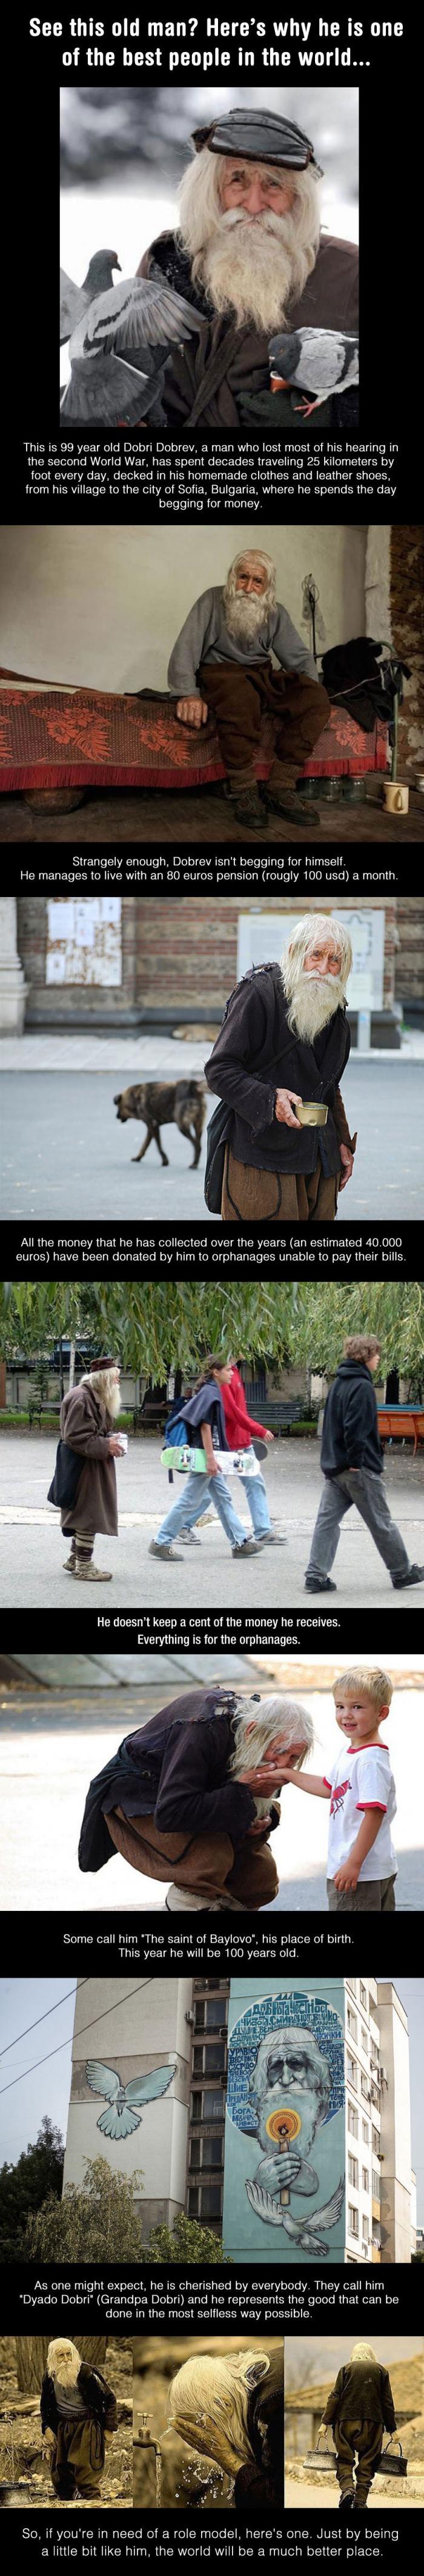 99-year-old-beggar-homeless-man-shows-true-love